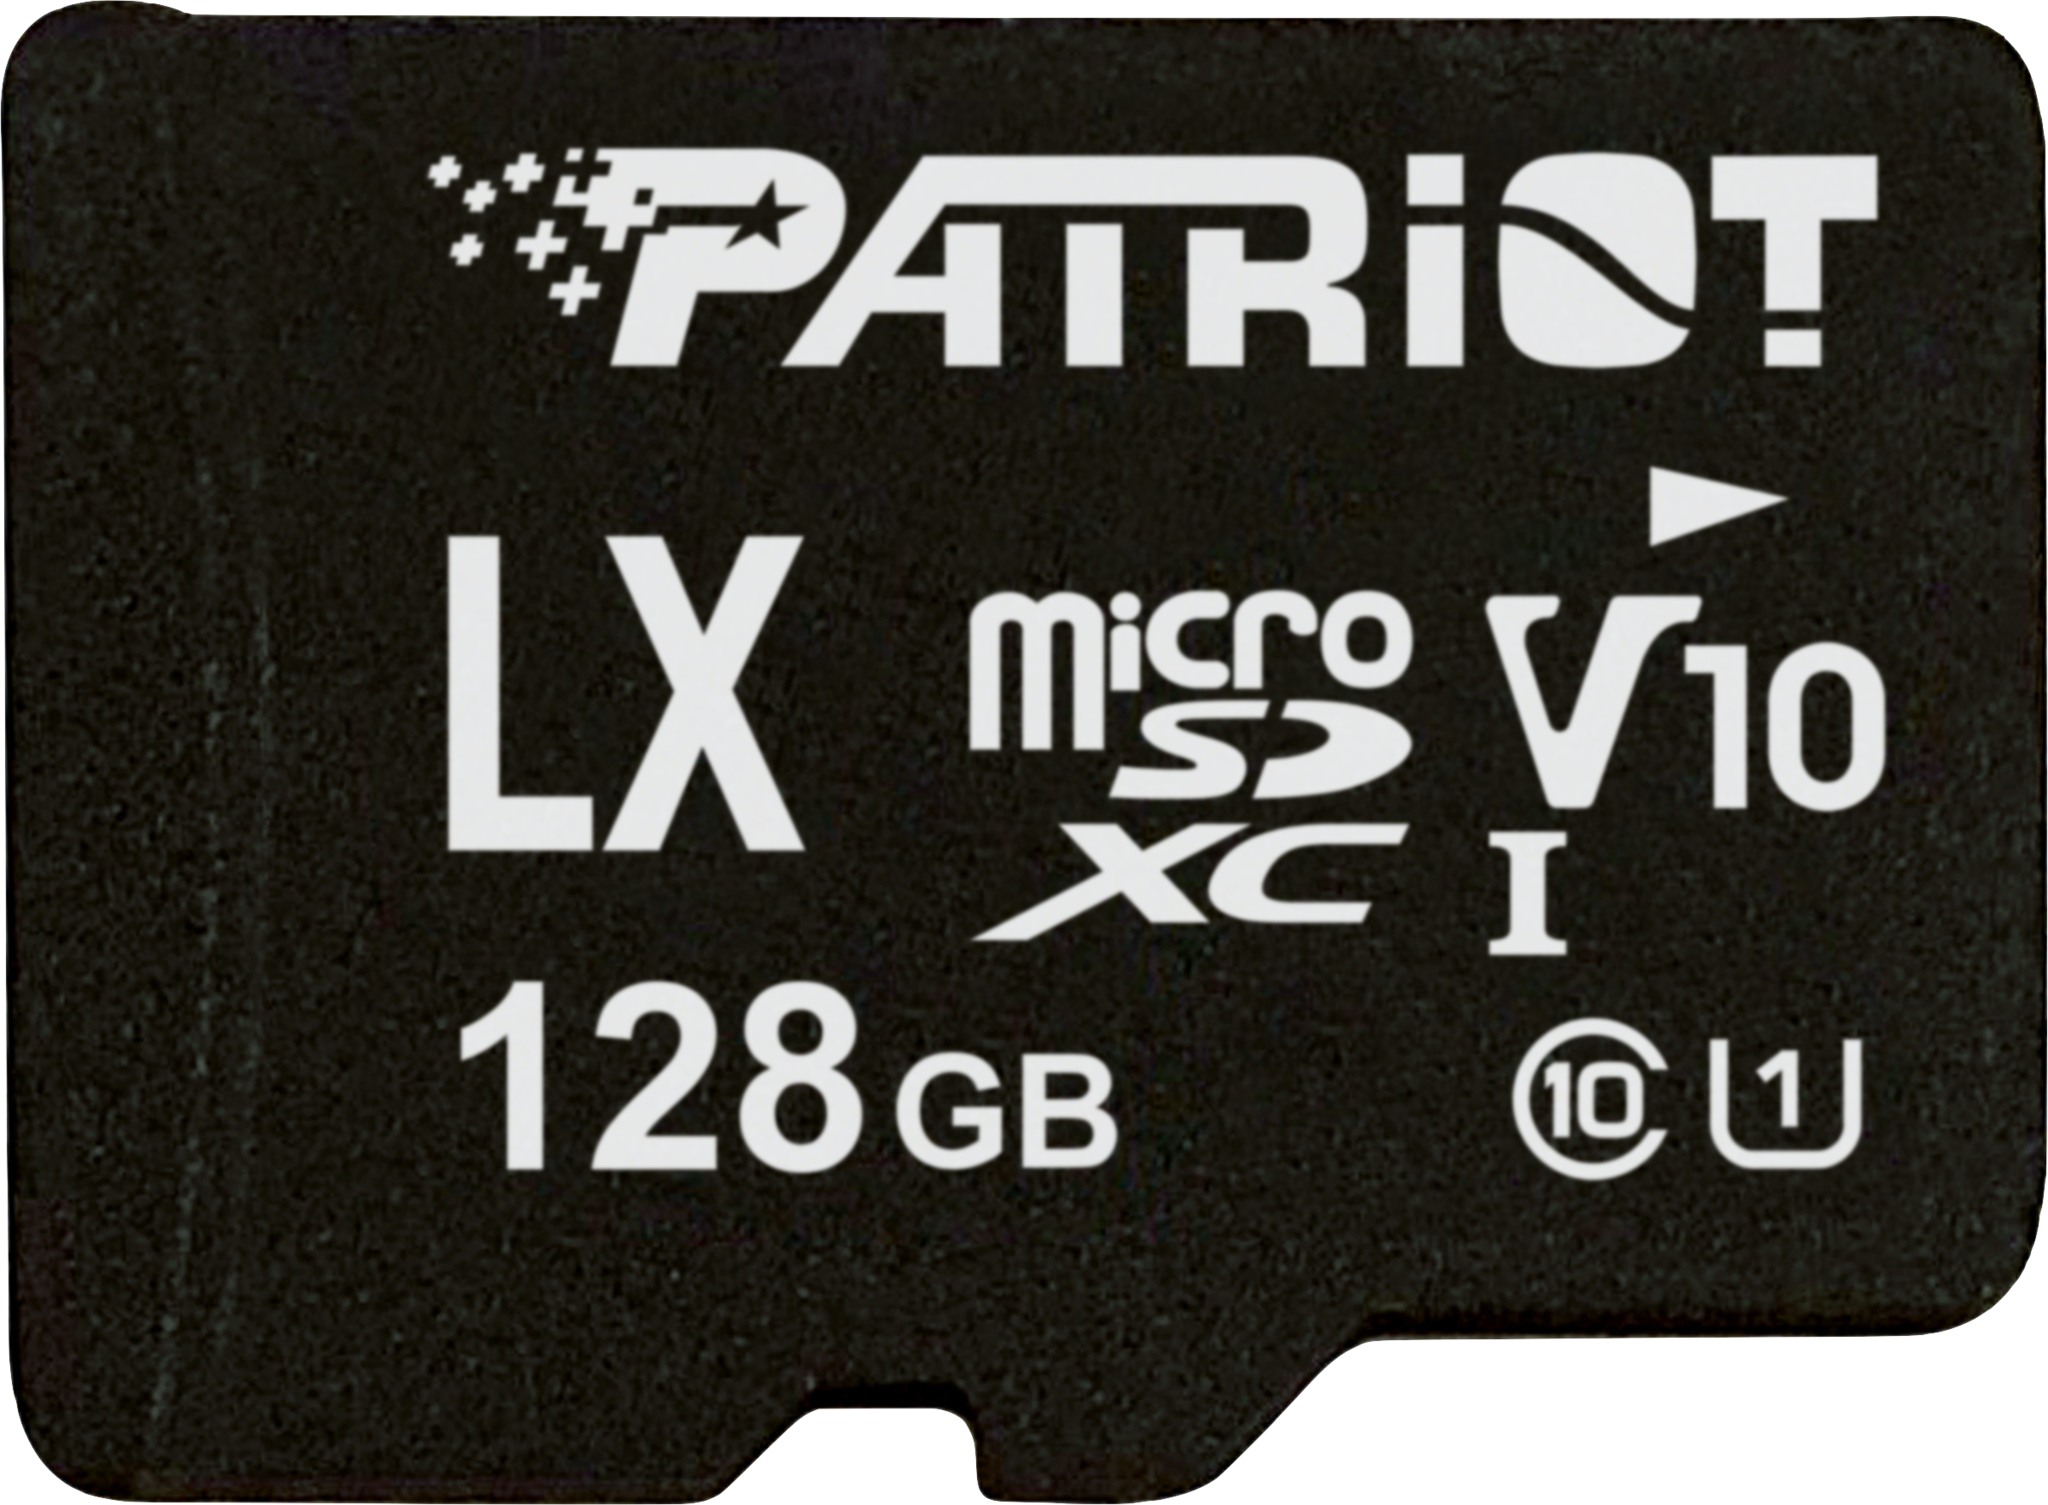 Patriot LX 128GB MicroSD Card